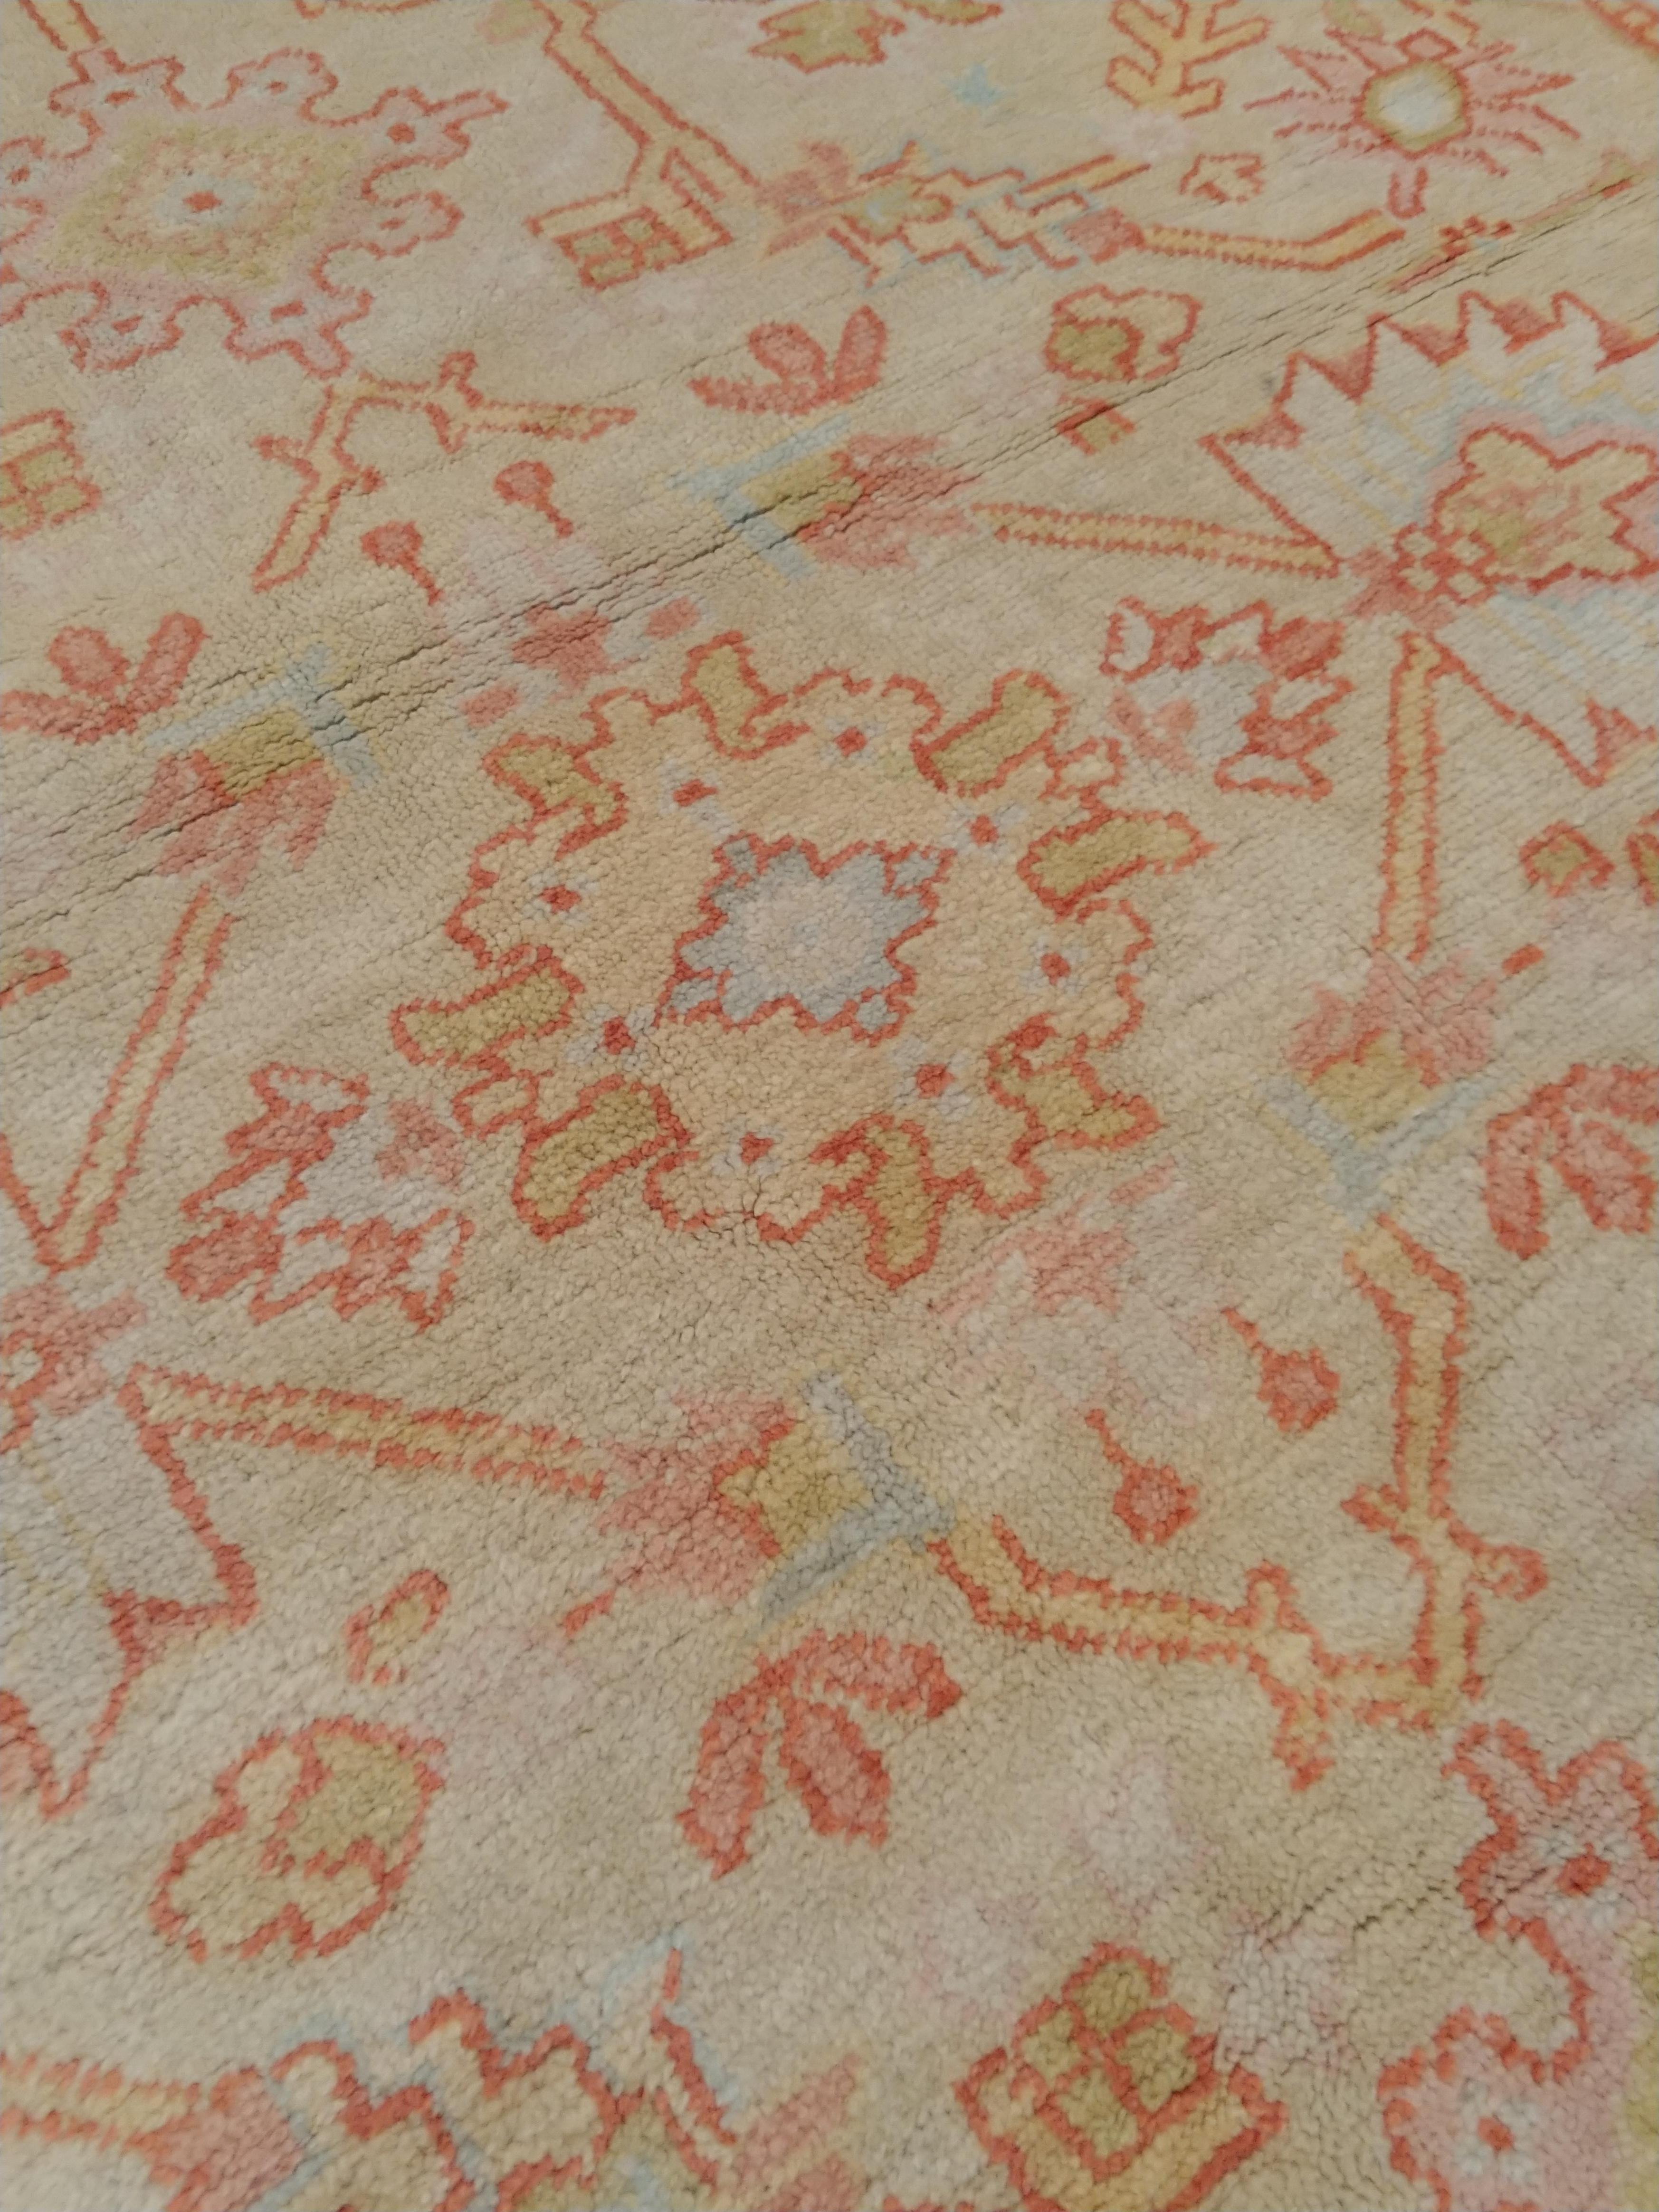 19th Century Antique Turkish Oushak Carpet, Handmade Oriental Rug, Beige, Taupe, Sage, Coral For Sale